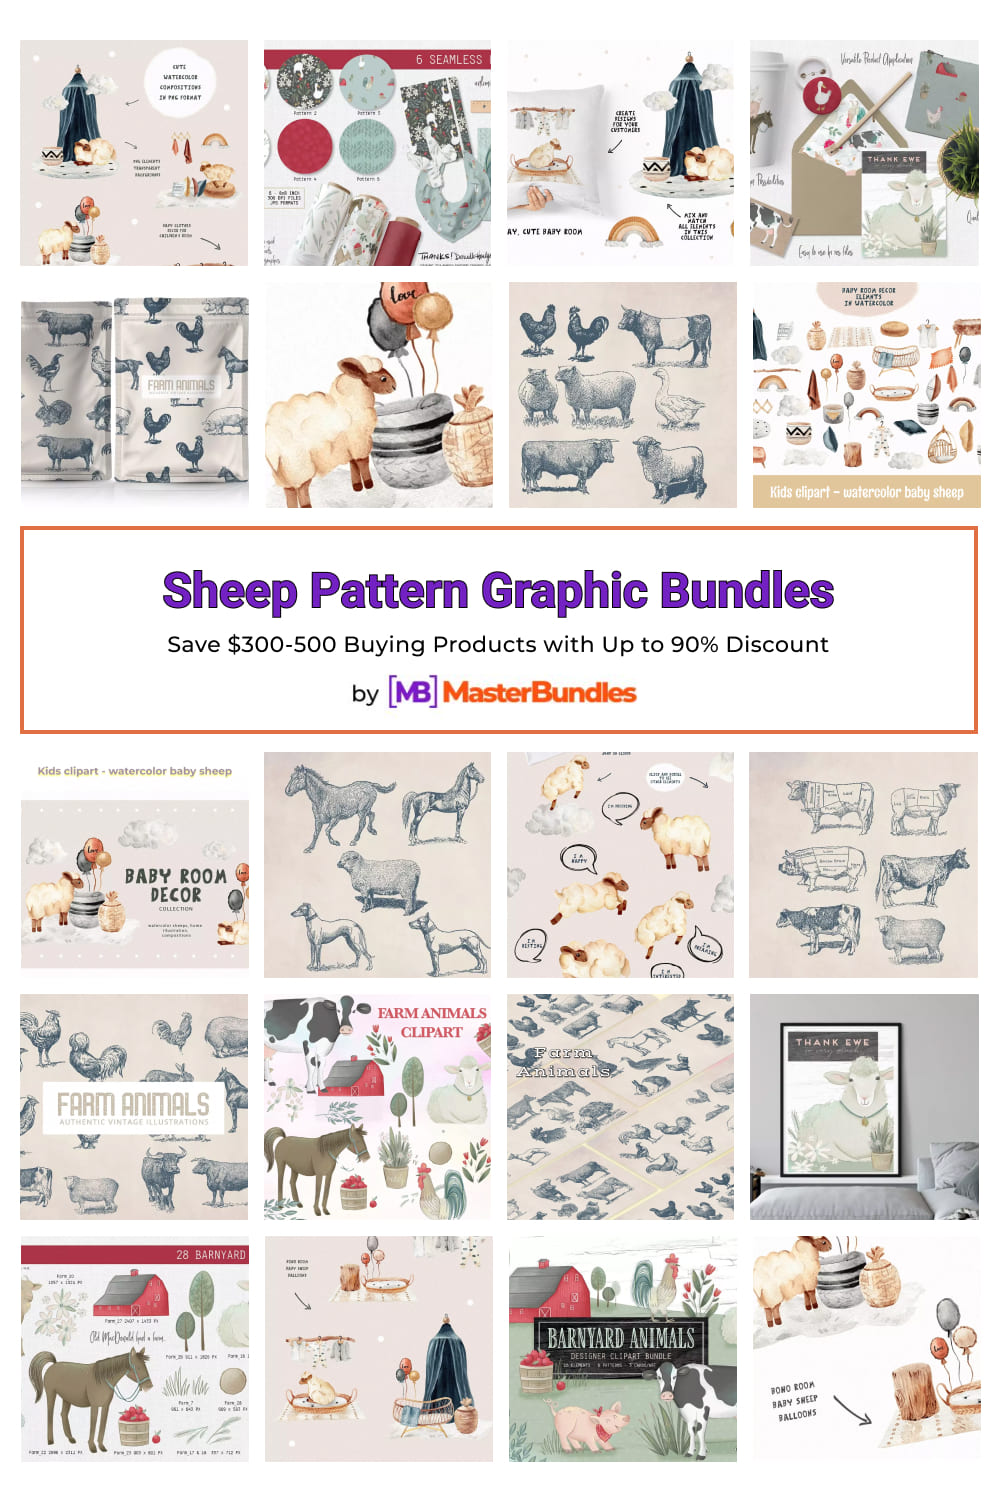 Sheep Pattern Graphic Bundles for pinterest.